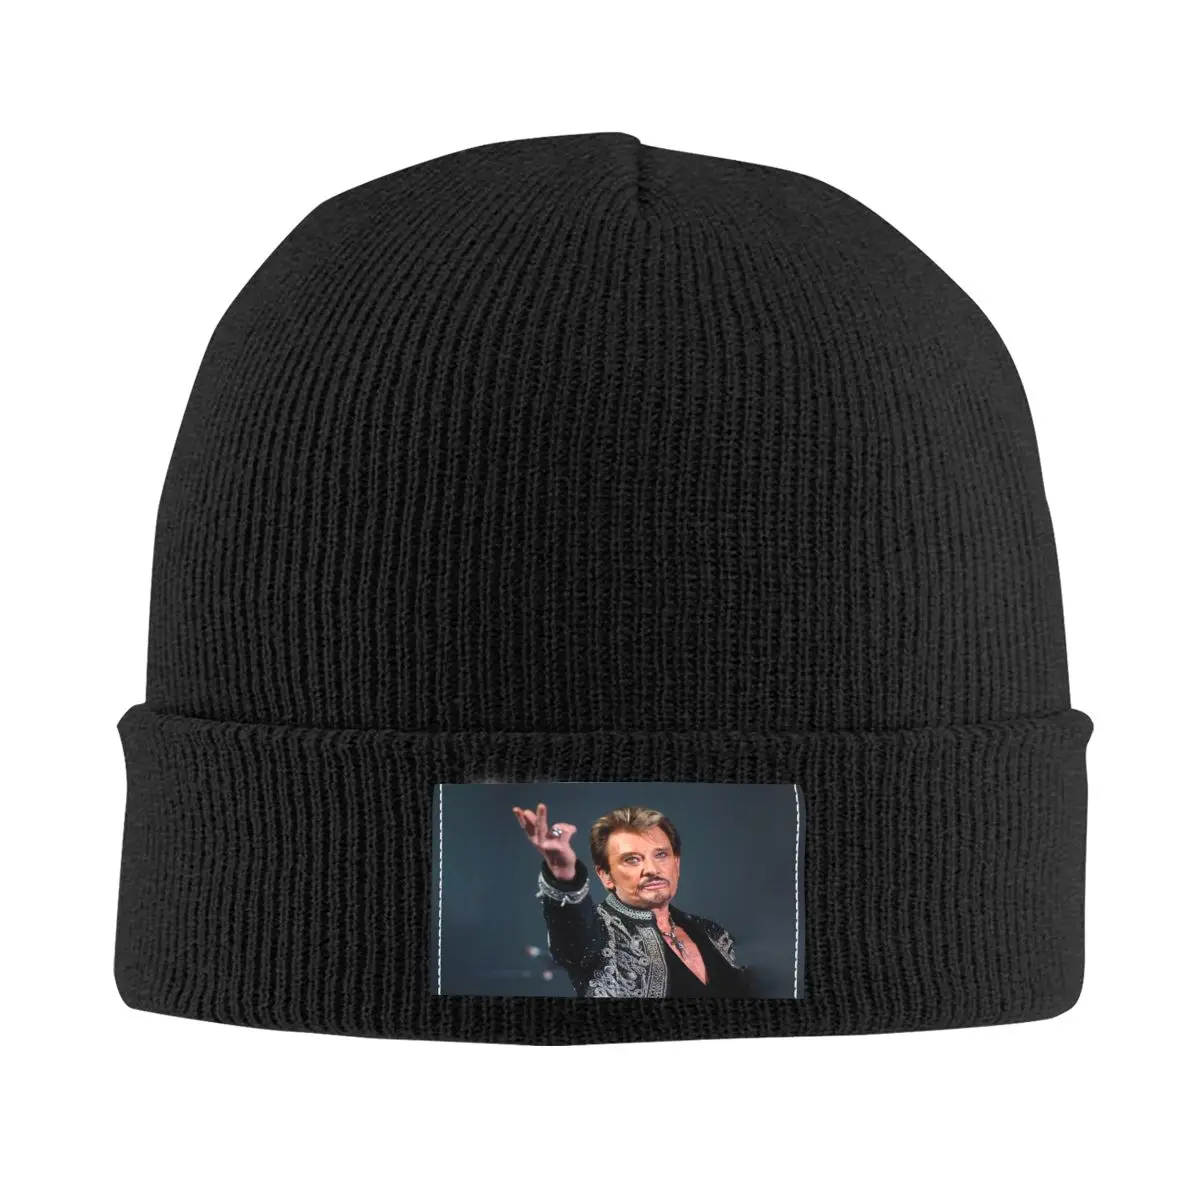 Rock Music Johnny Hallyday Bonnet Hats Hip Hop Knitted Hat For Women Men Warm Winter French Singer Skullies Beanies Caps 1